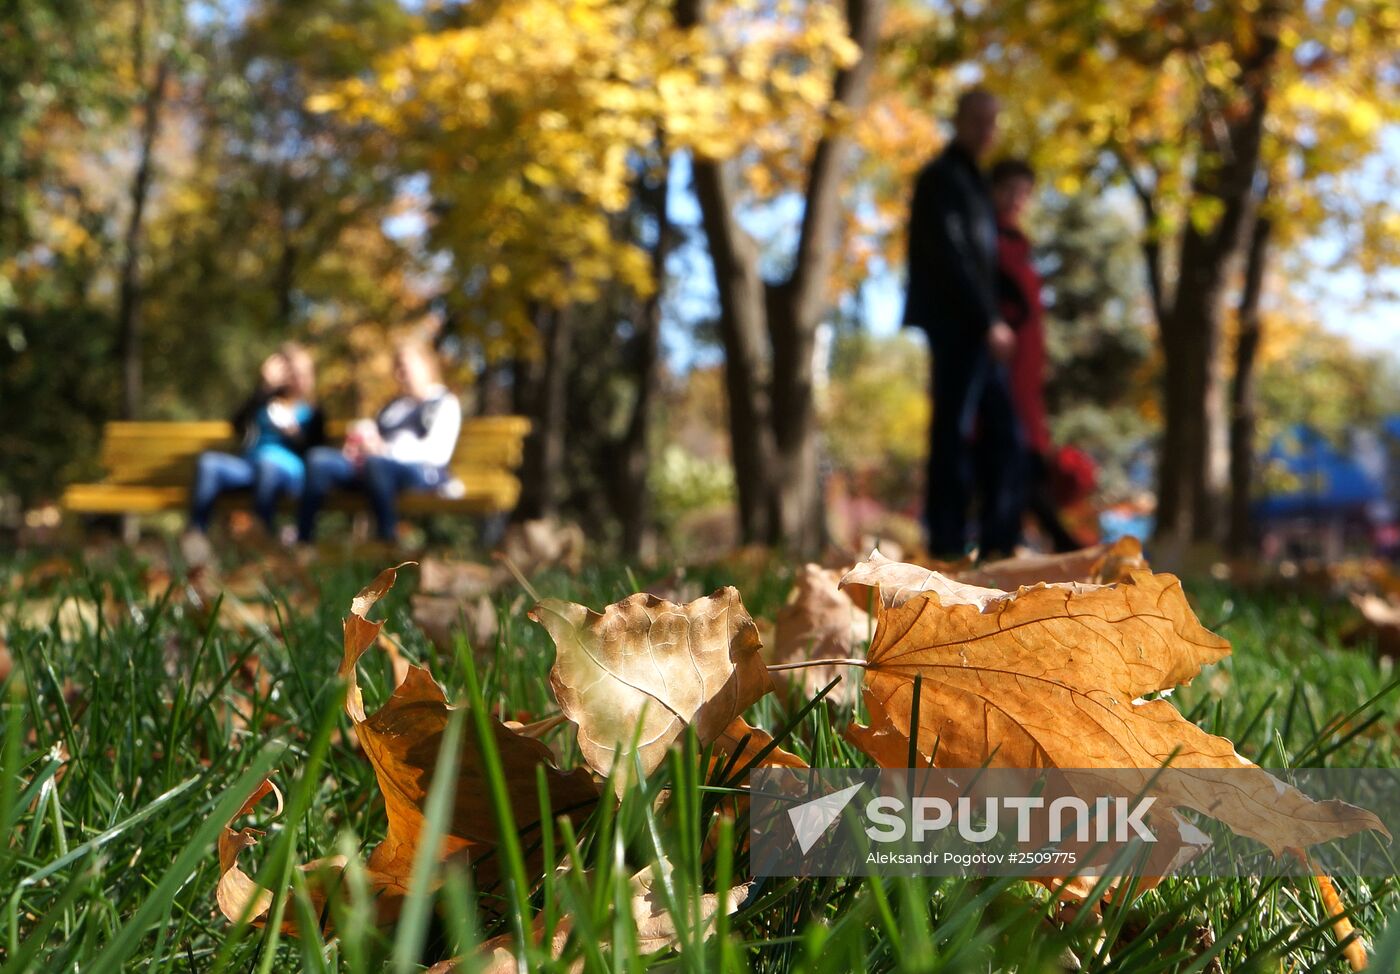 Autumn in Rostov-on-Don